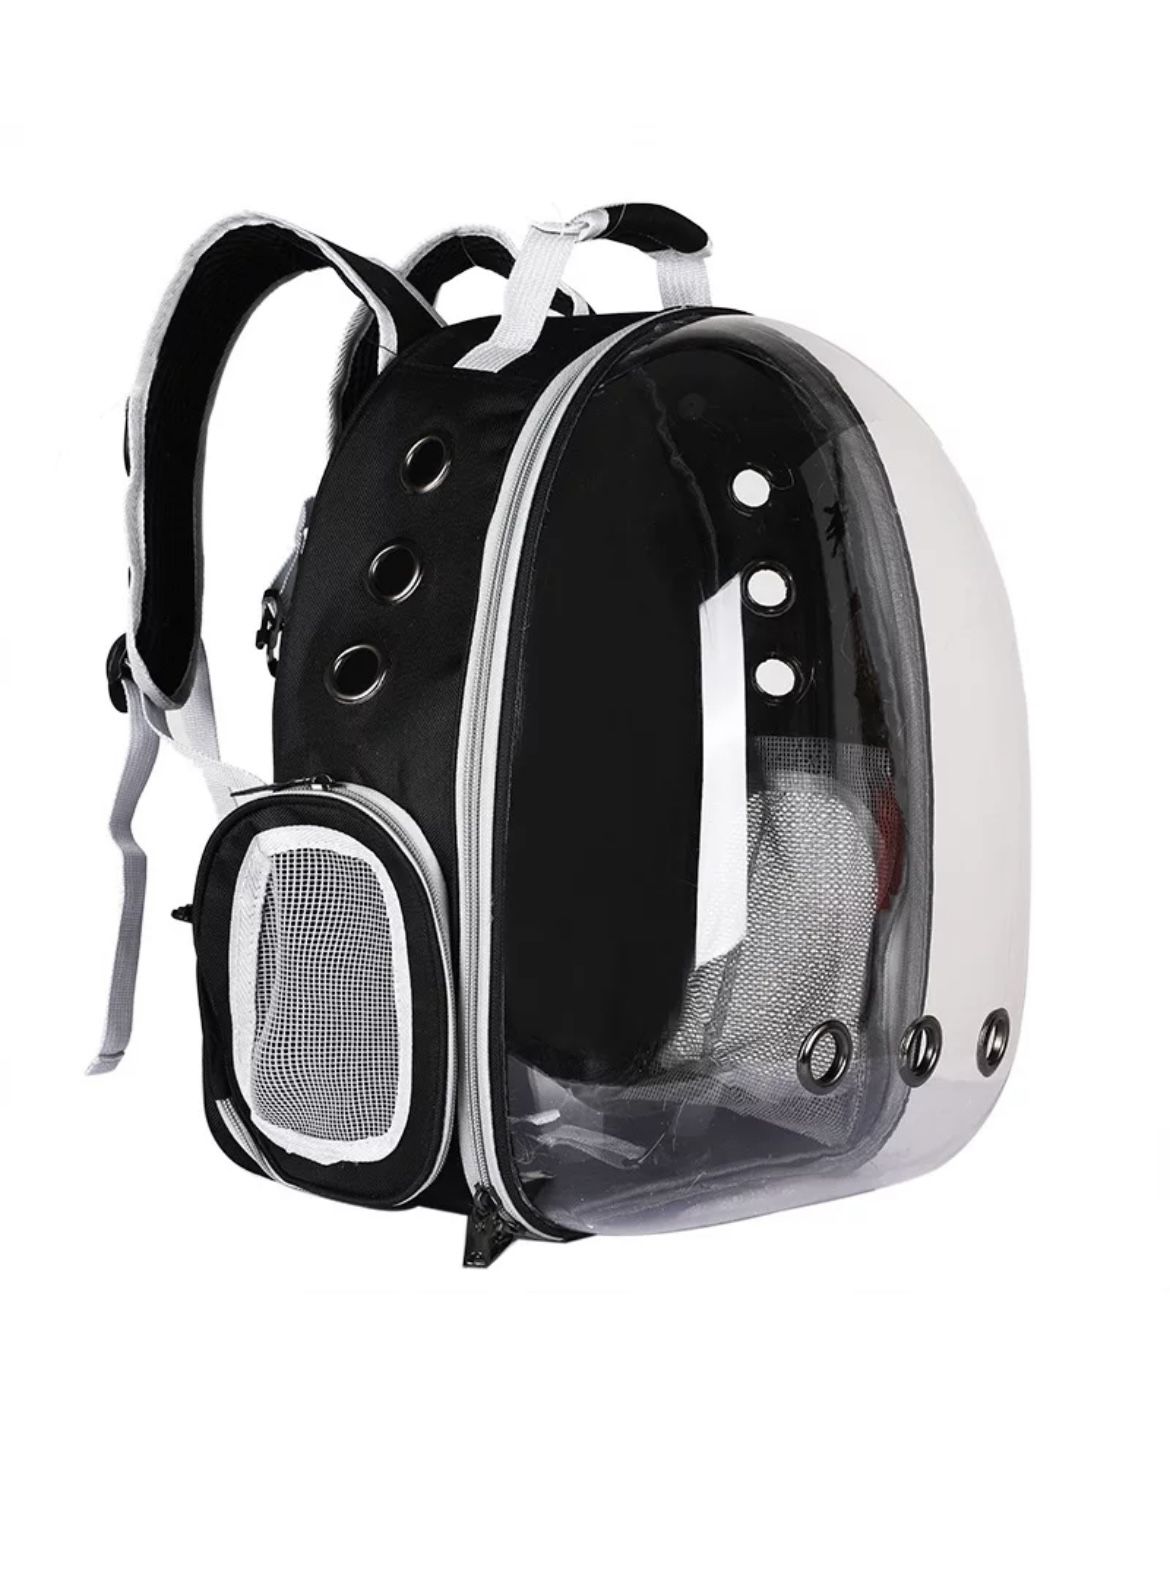 Clear Transparent Cage Pet Васкрс Carrier Bag for Cat & Dog